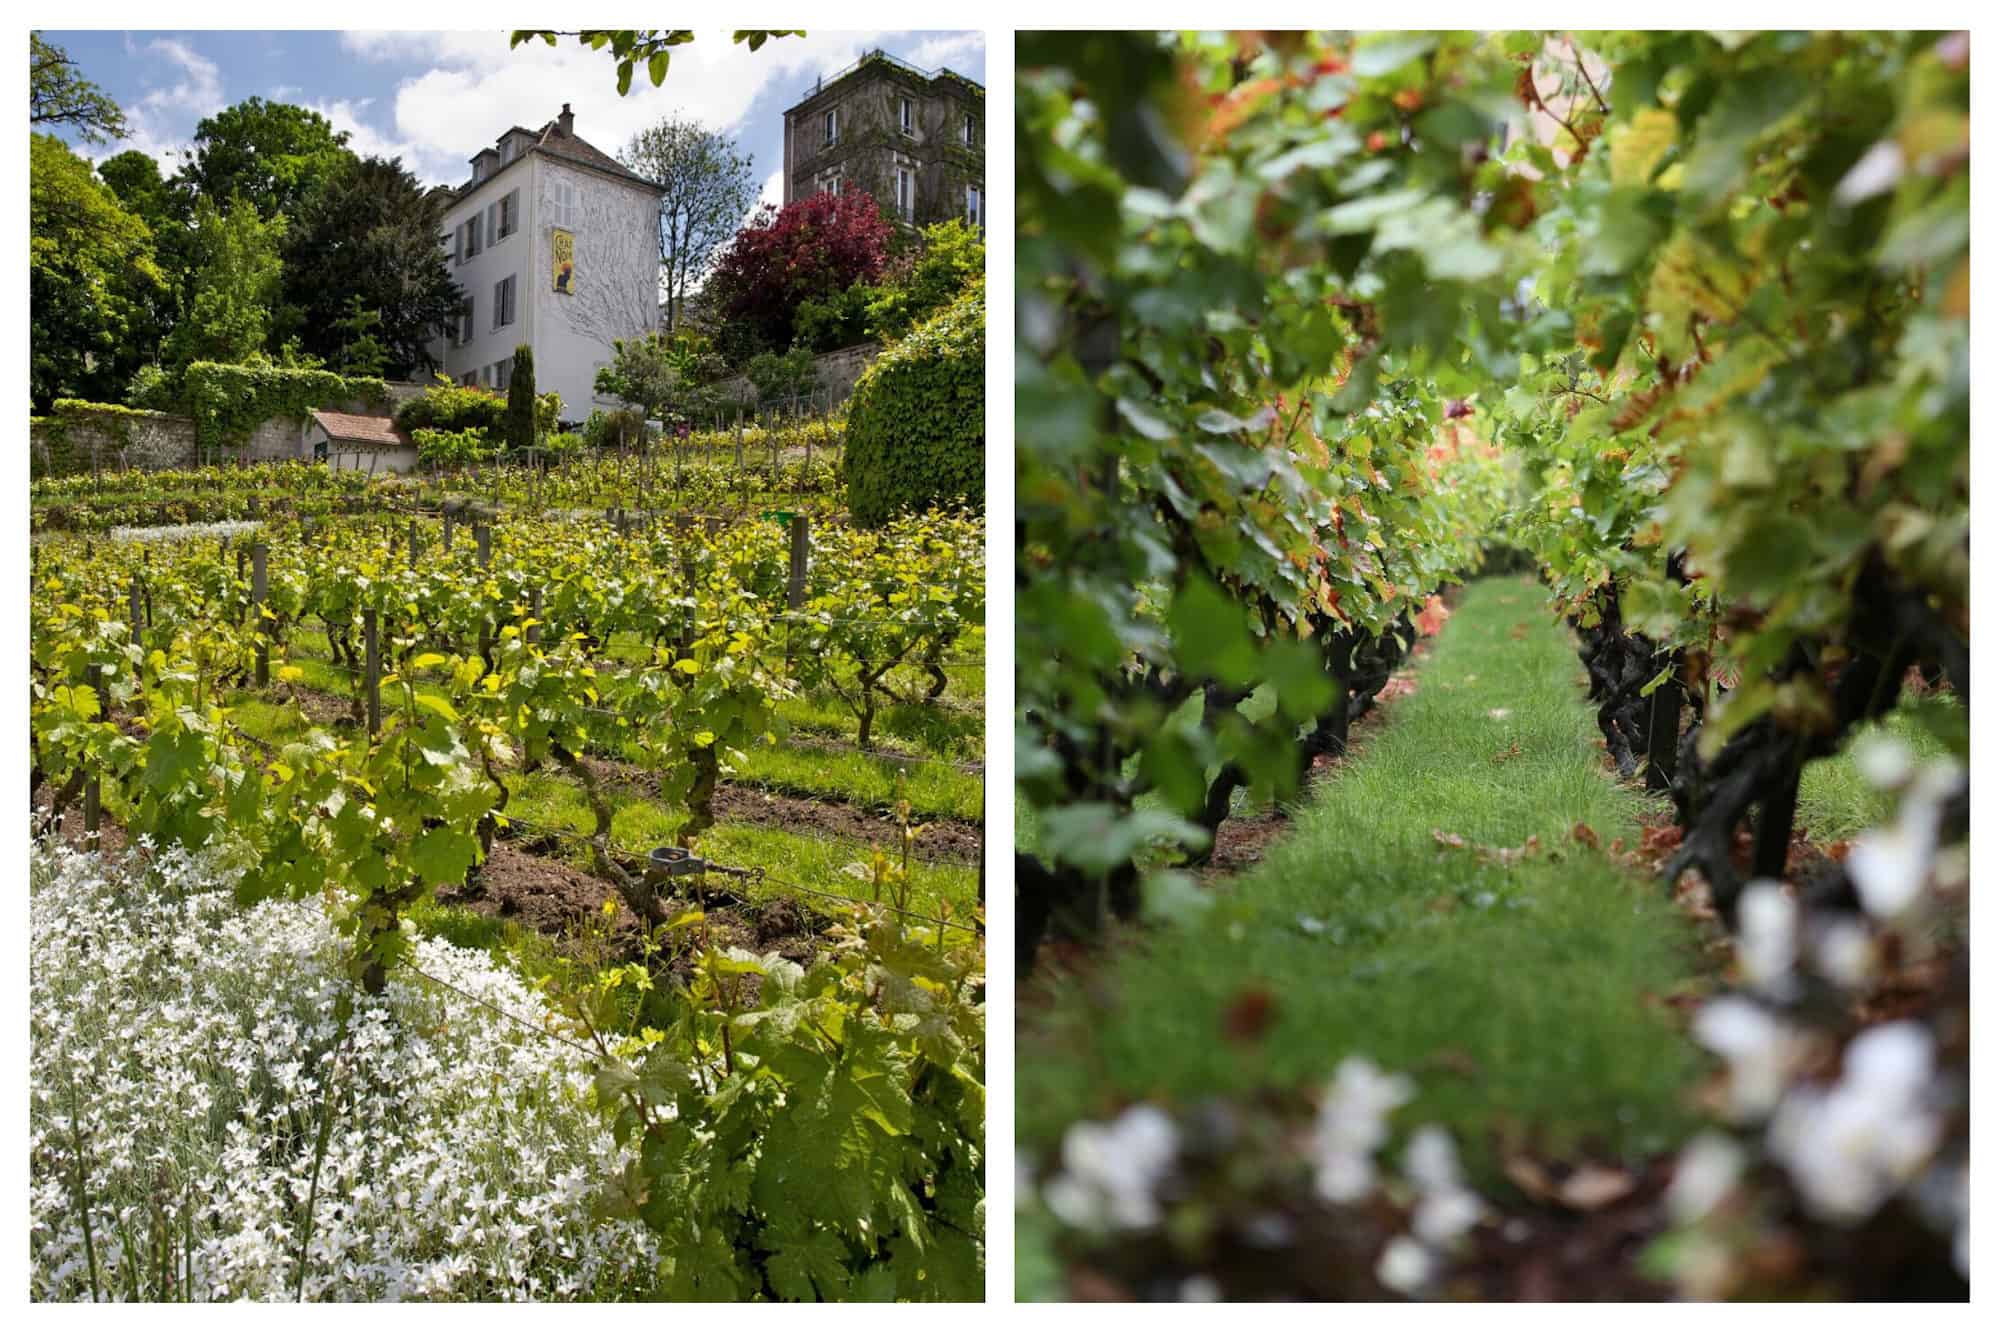 One event not to miss in Paris in October is the Fête des Vendanges in Montmartre's hidden vineyard.